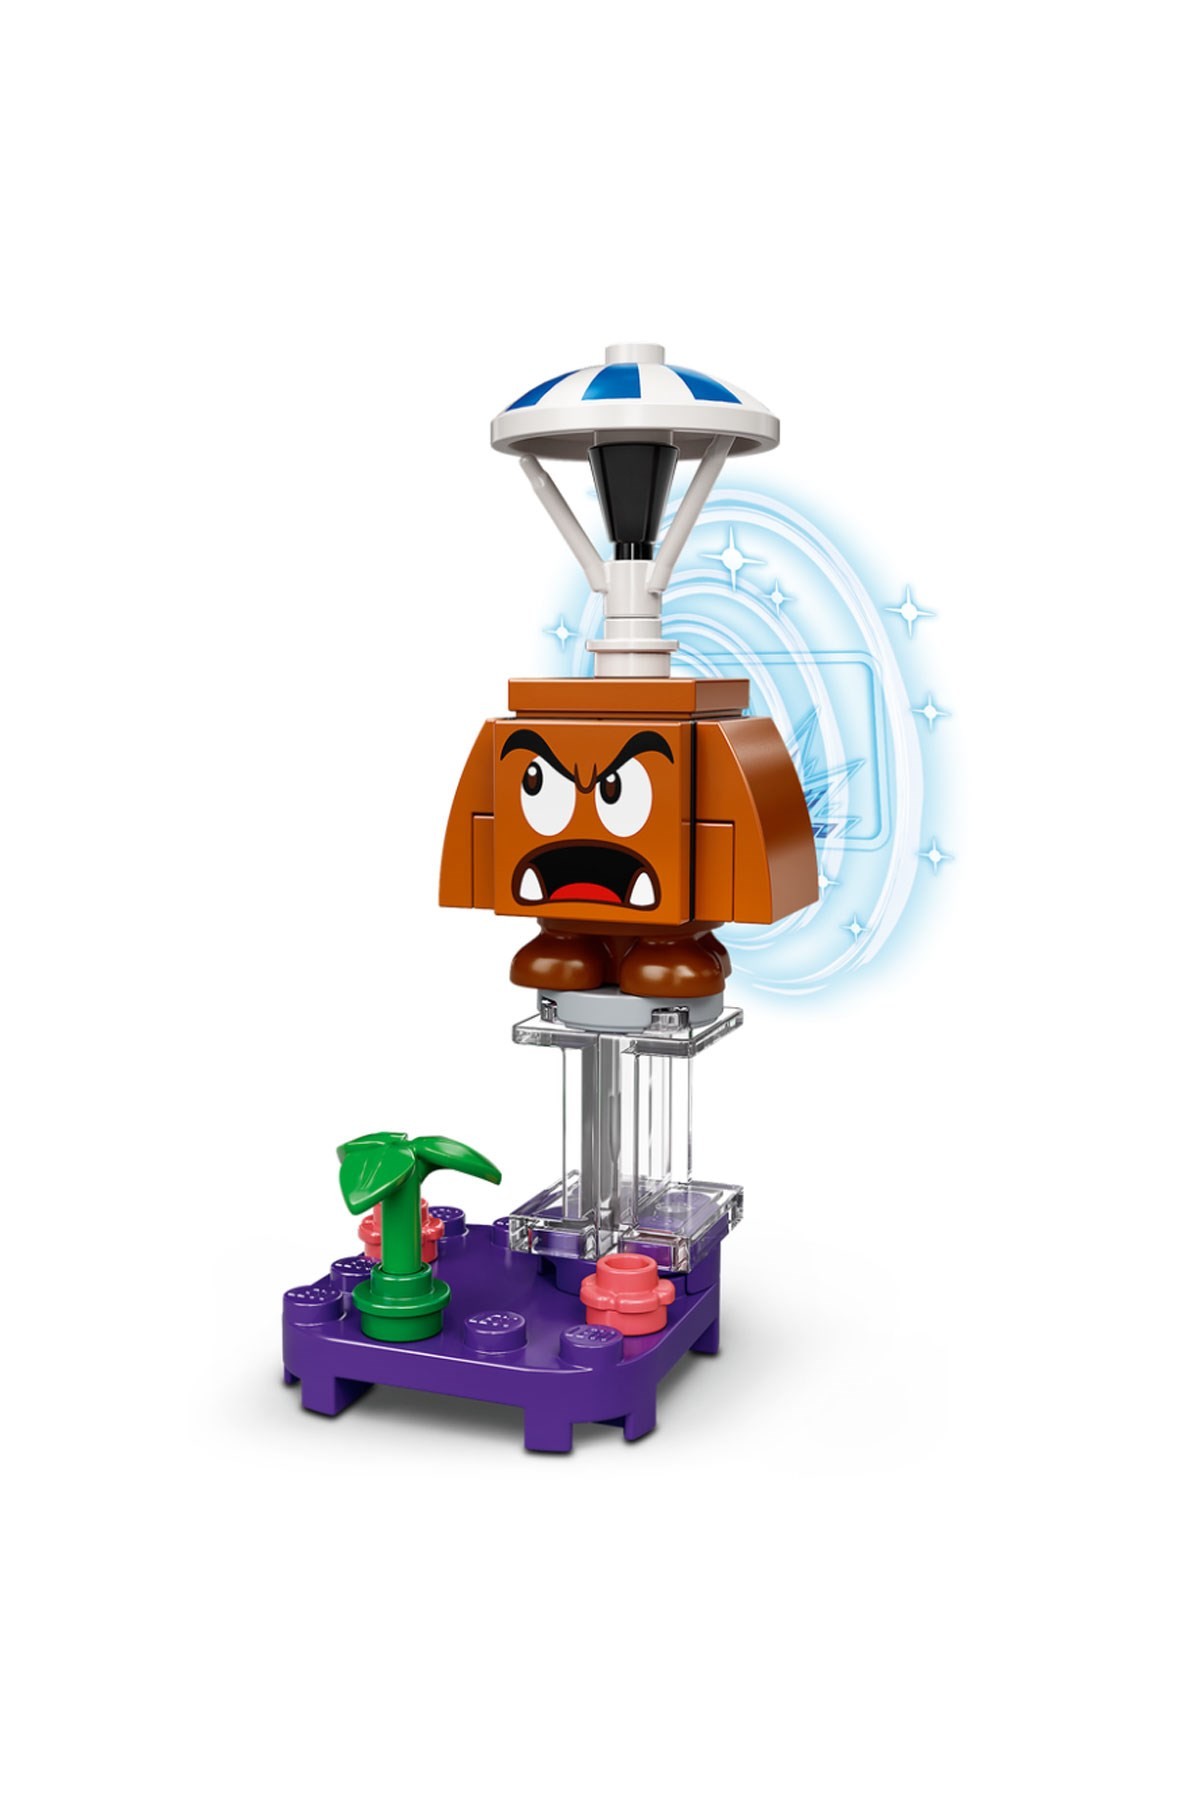 Lego Super Mario Karakterler Sürpriz Paket